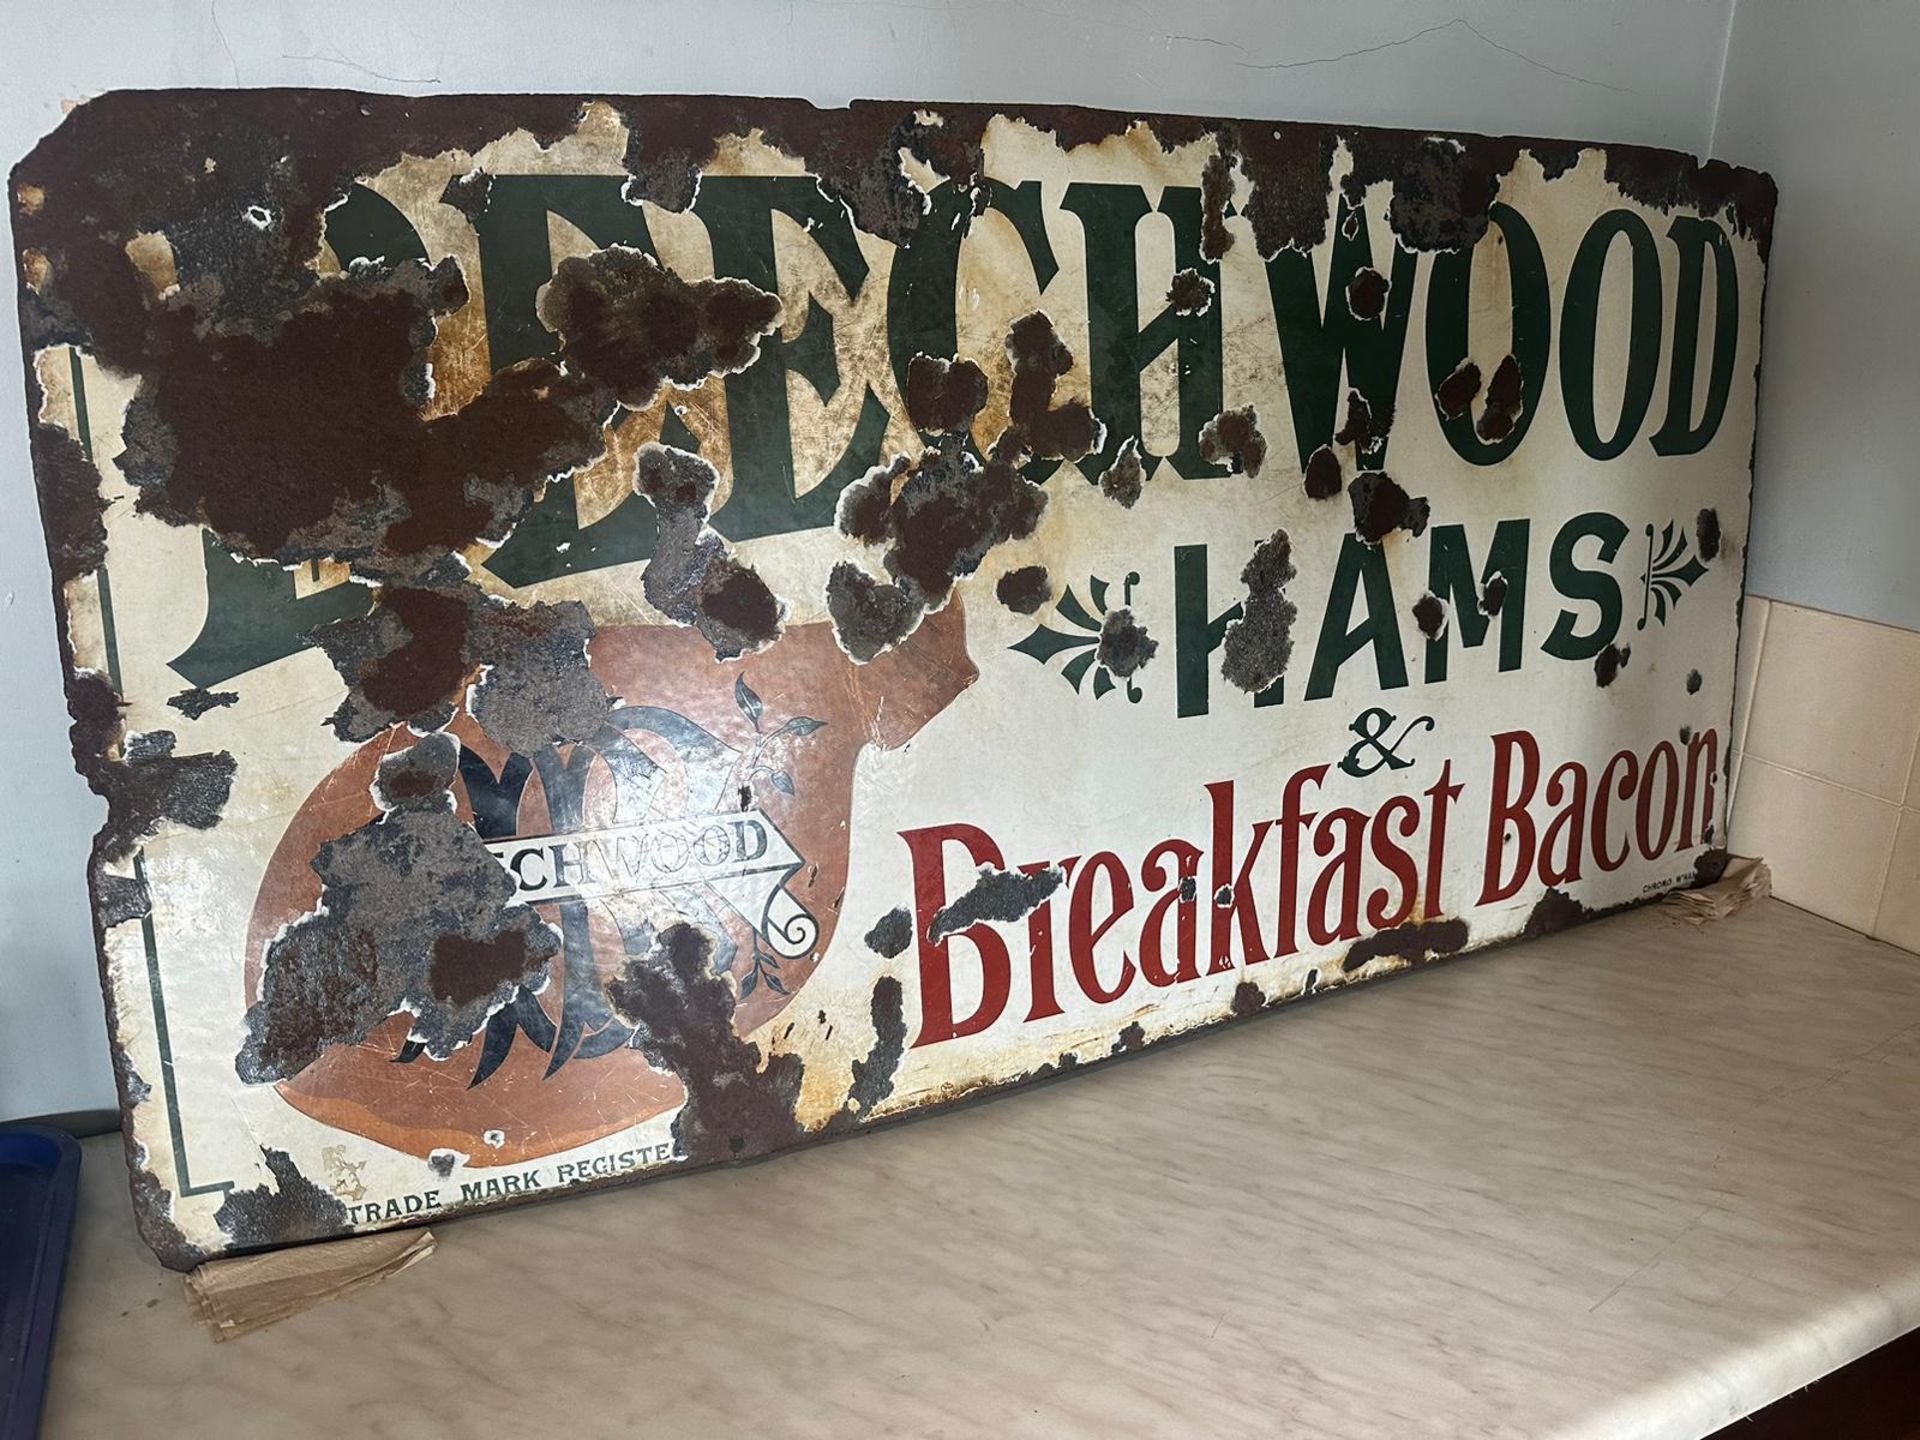 A vintage enamelled advertising sign for Beechwood Hams & Breakfast Bacon,